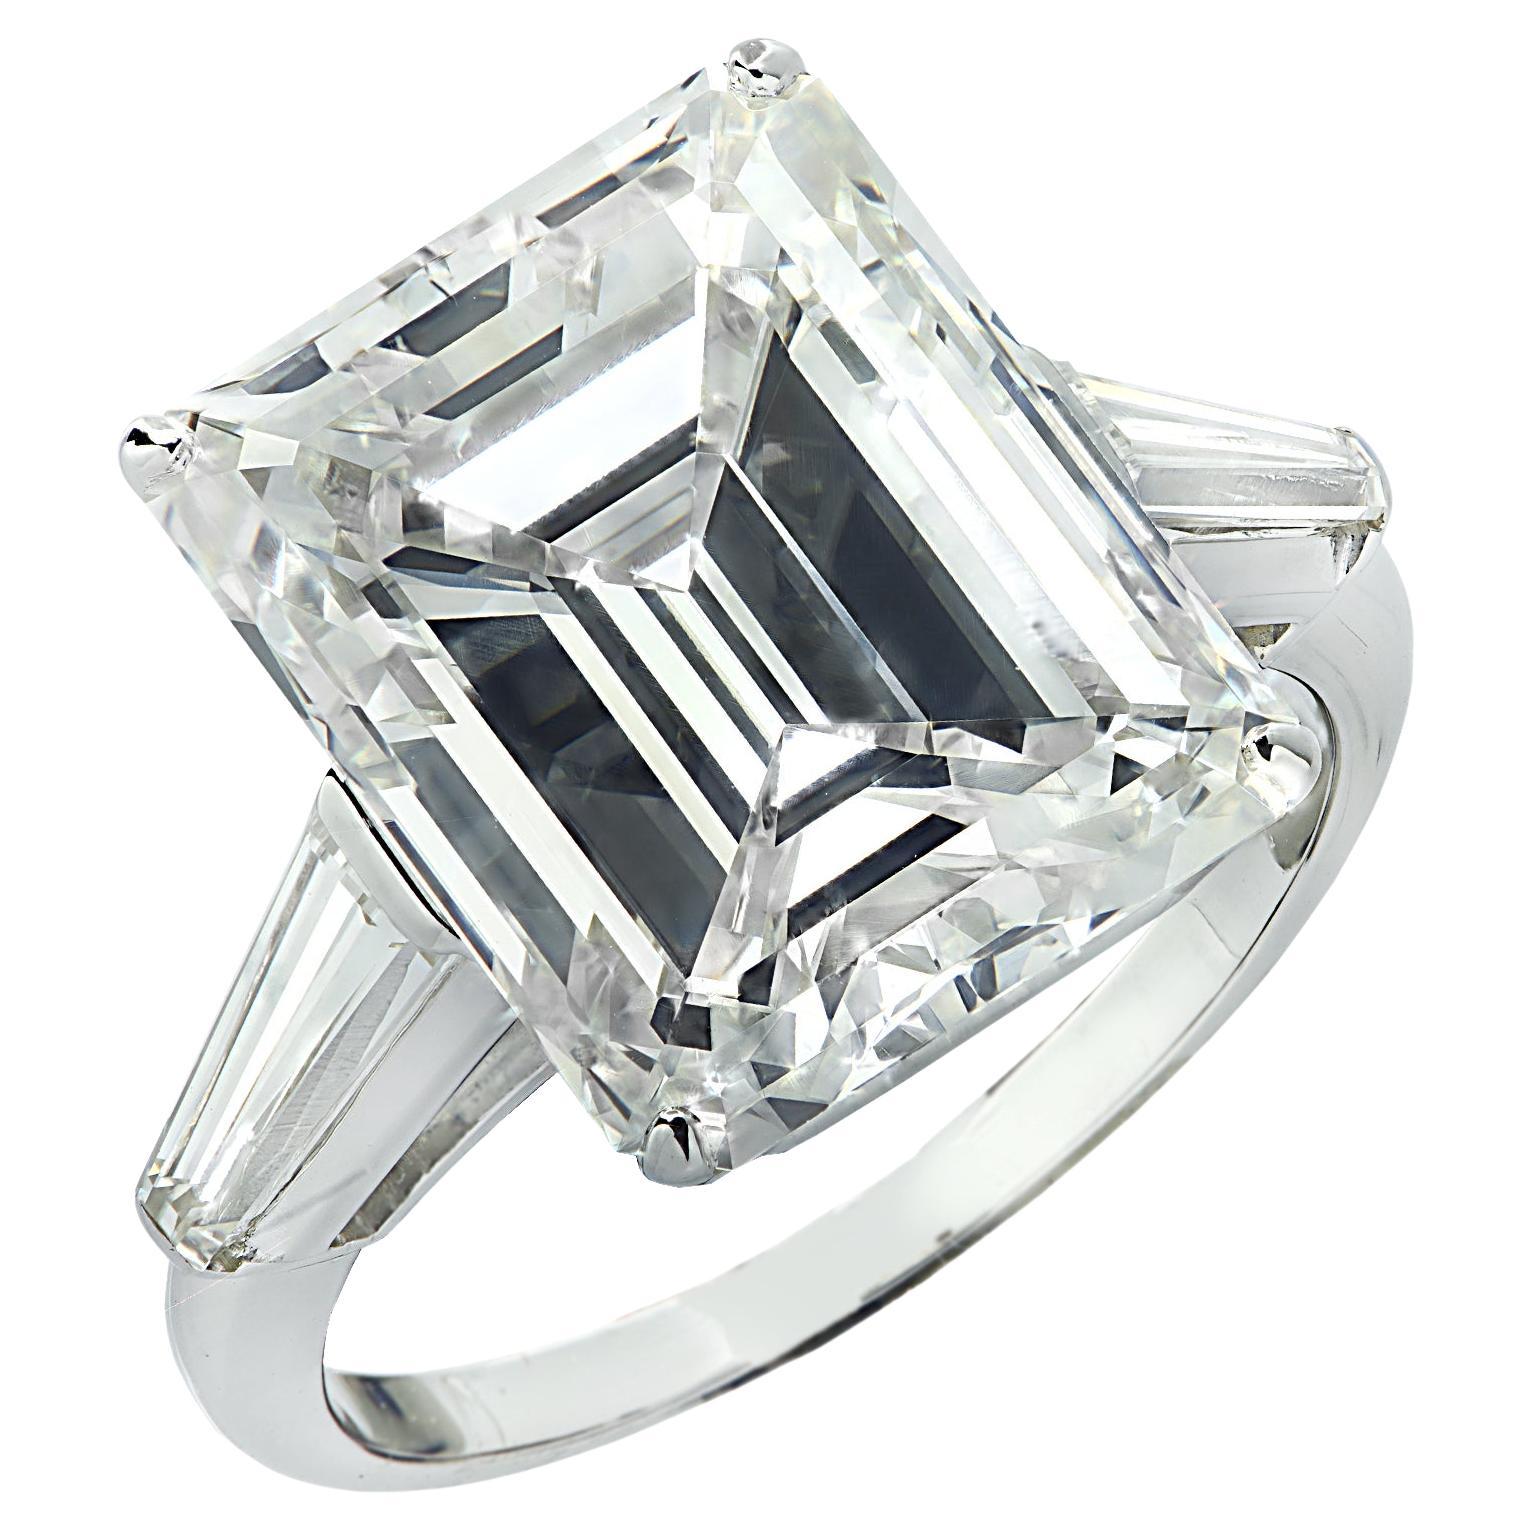 Vivid Diamonds GIA Certified 12.29 Carat Emerald Cut Diamond Engagement Ring